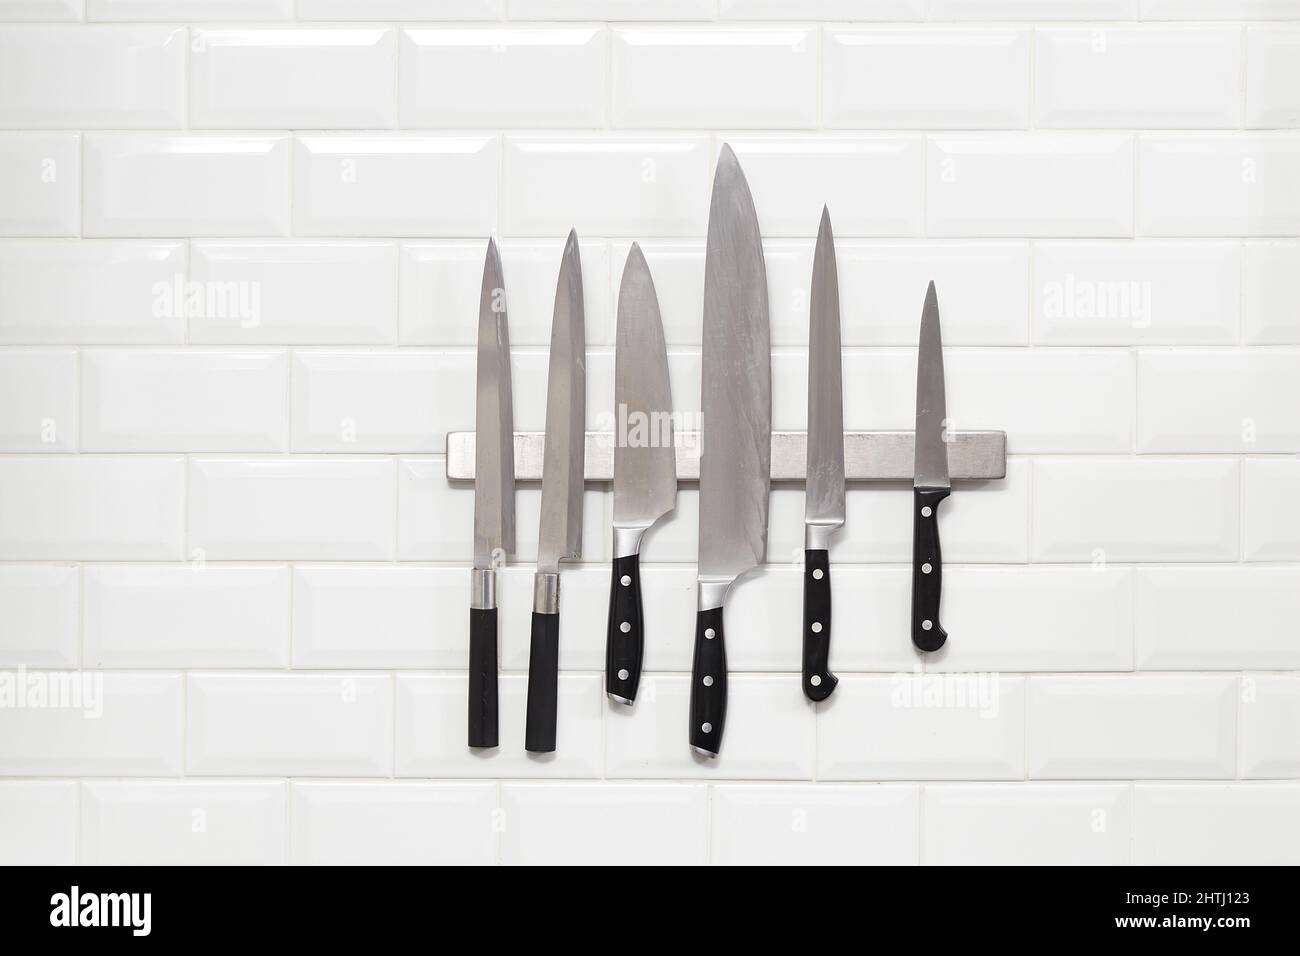 Six Japanese knifes hanging on white wall tile Stock Photo